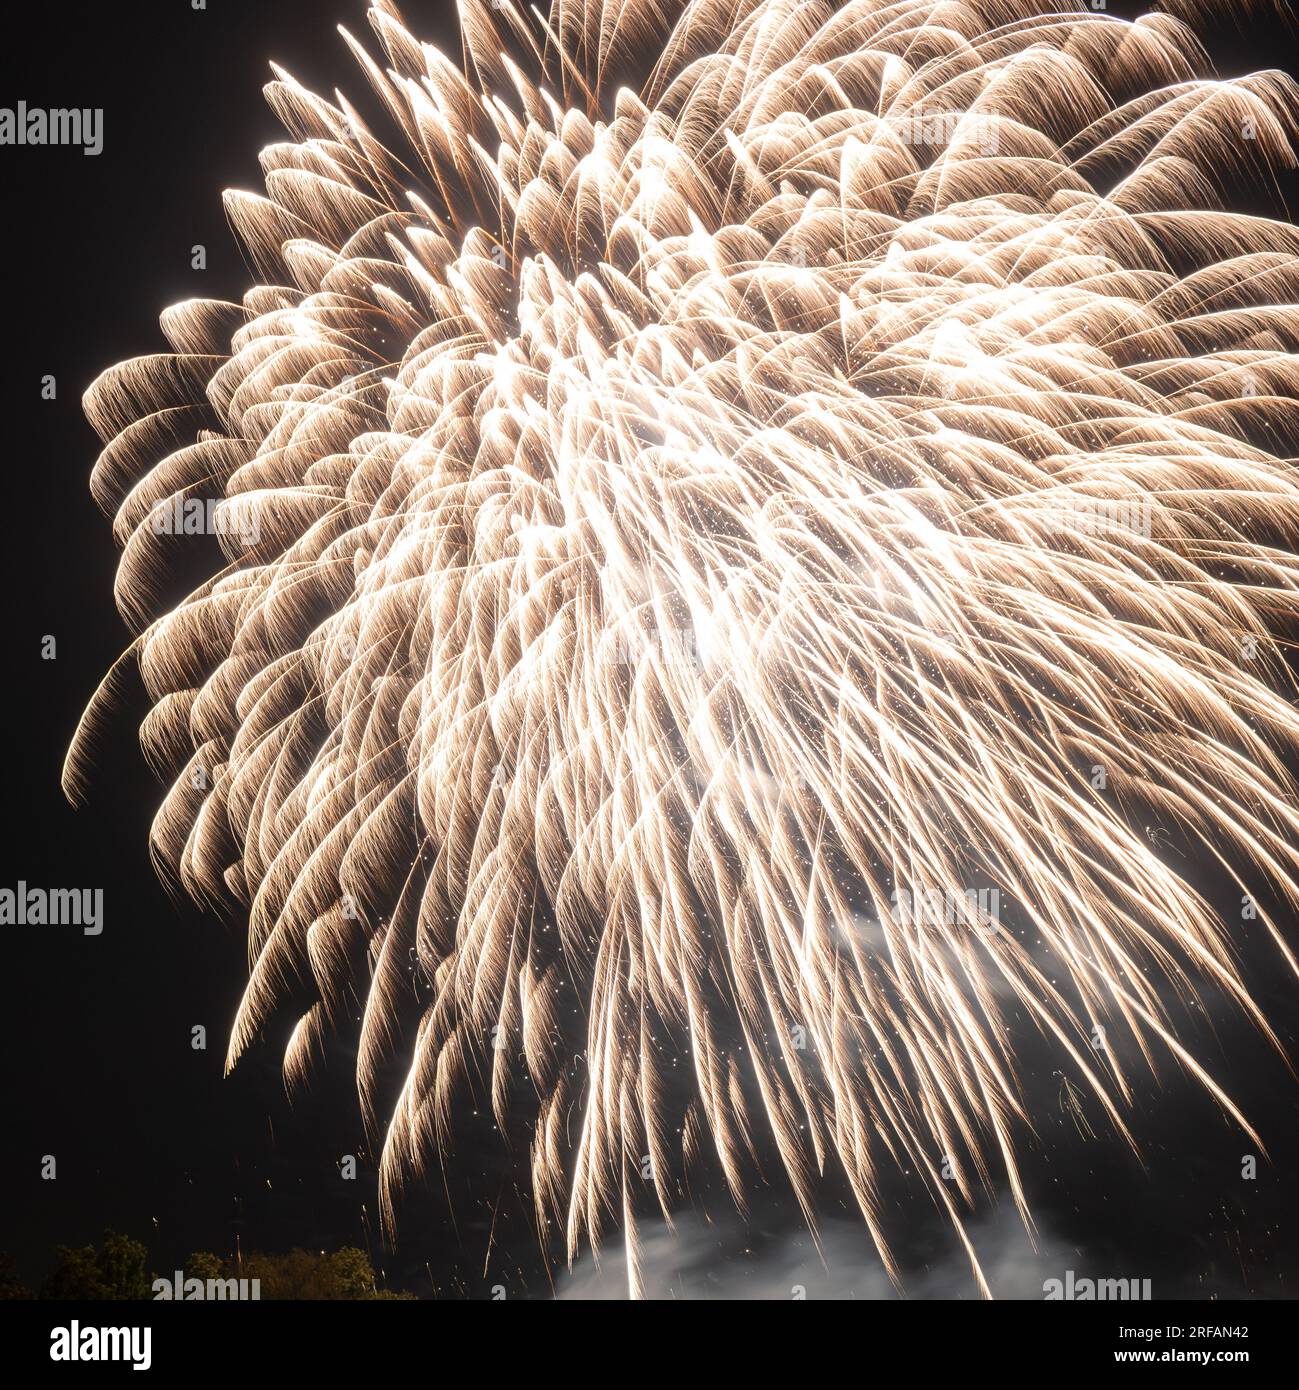 A firework display against a dark night sky Stock Photo